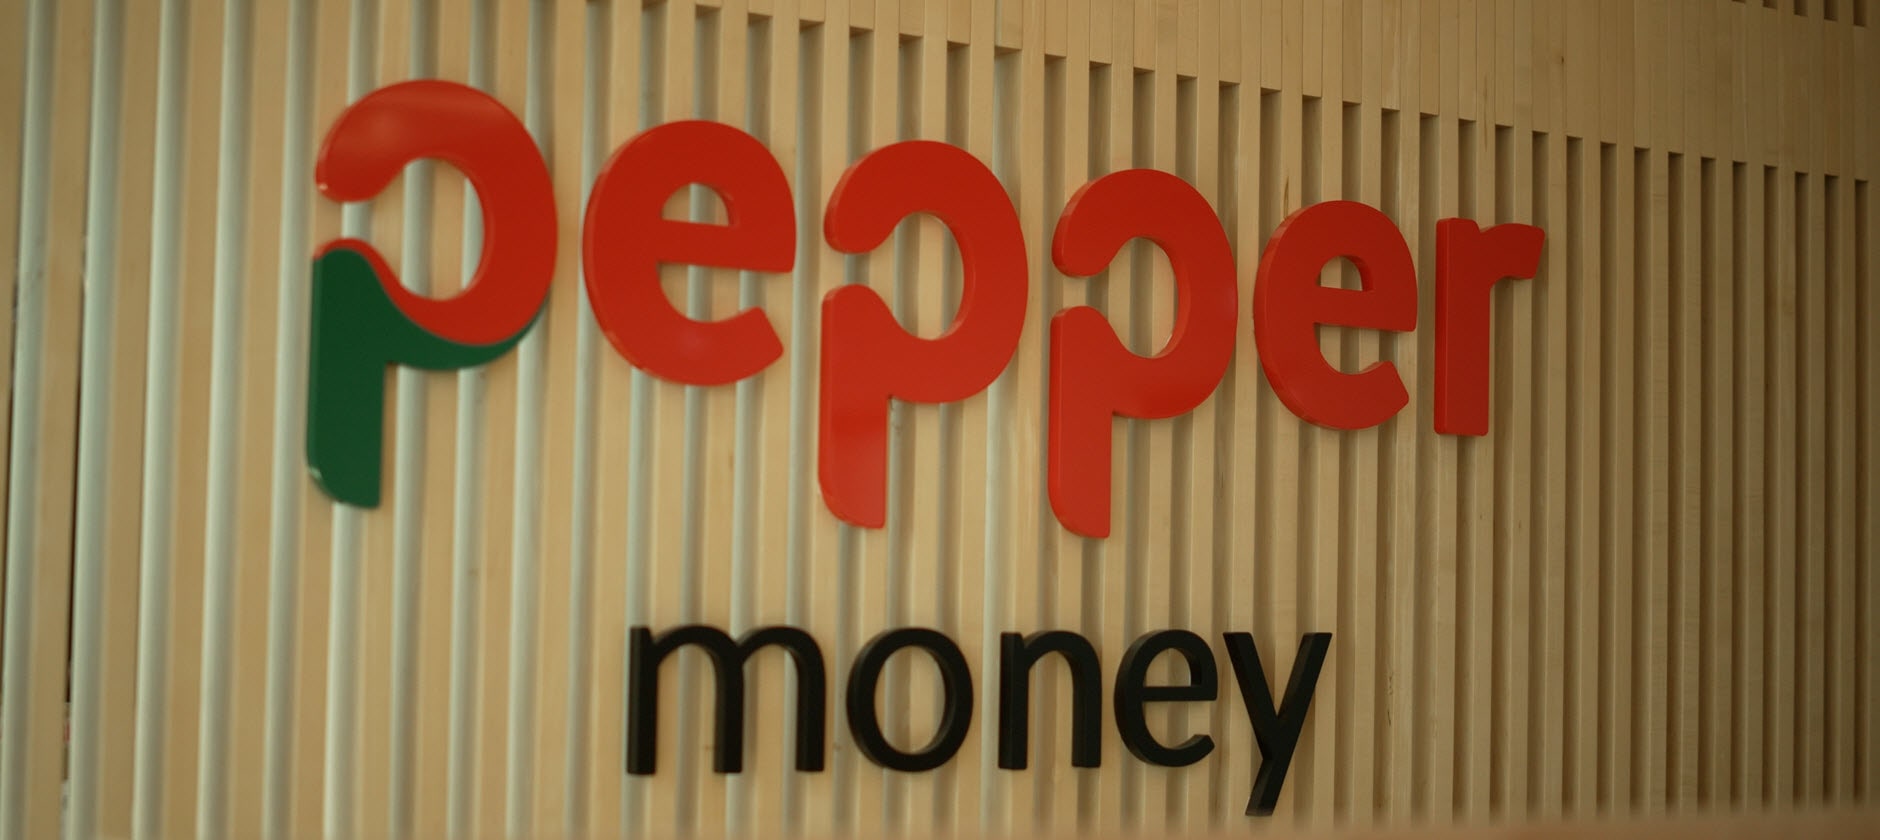 Supporting Pepper Money in streamlining mortgage origination